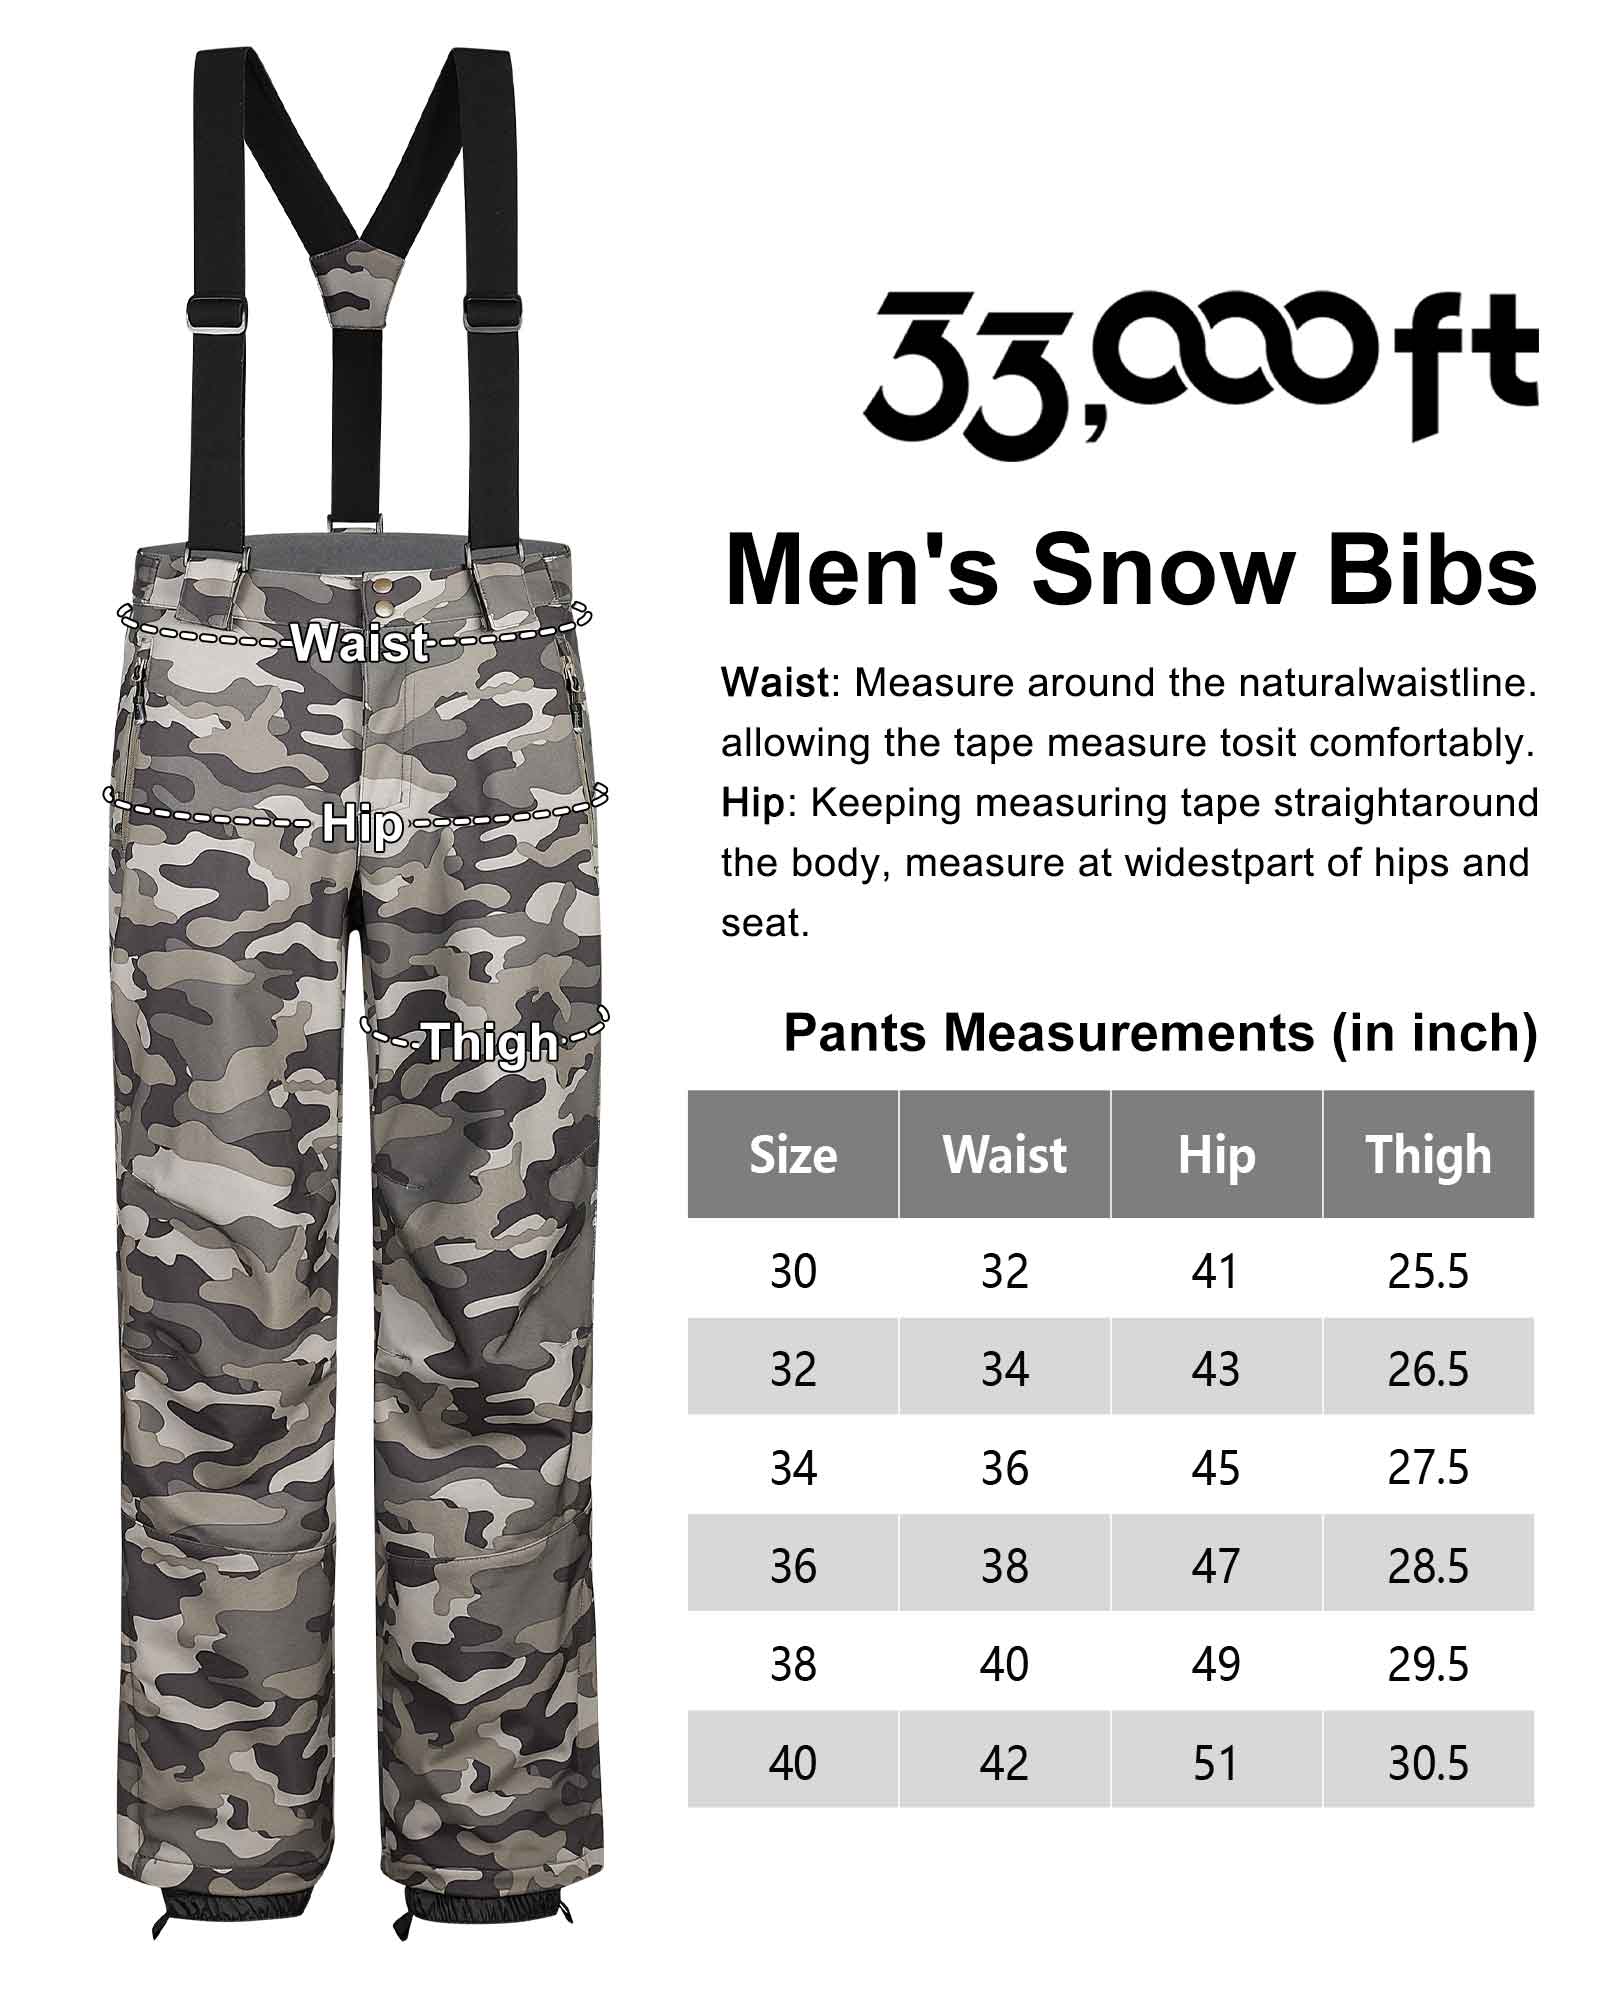 33,000ft Women's Insulated Snow Pants, Waterproof Snowboard Ski